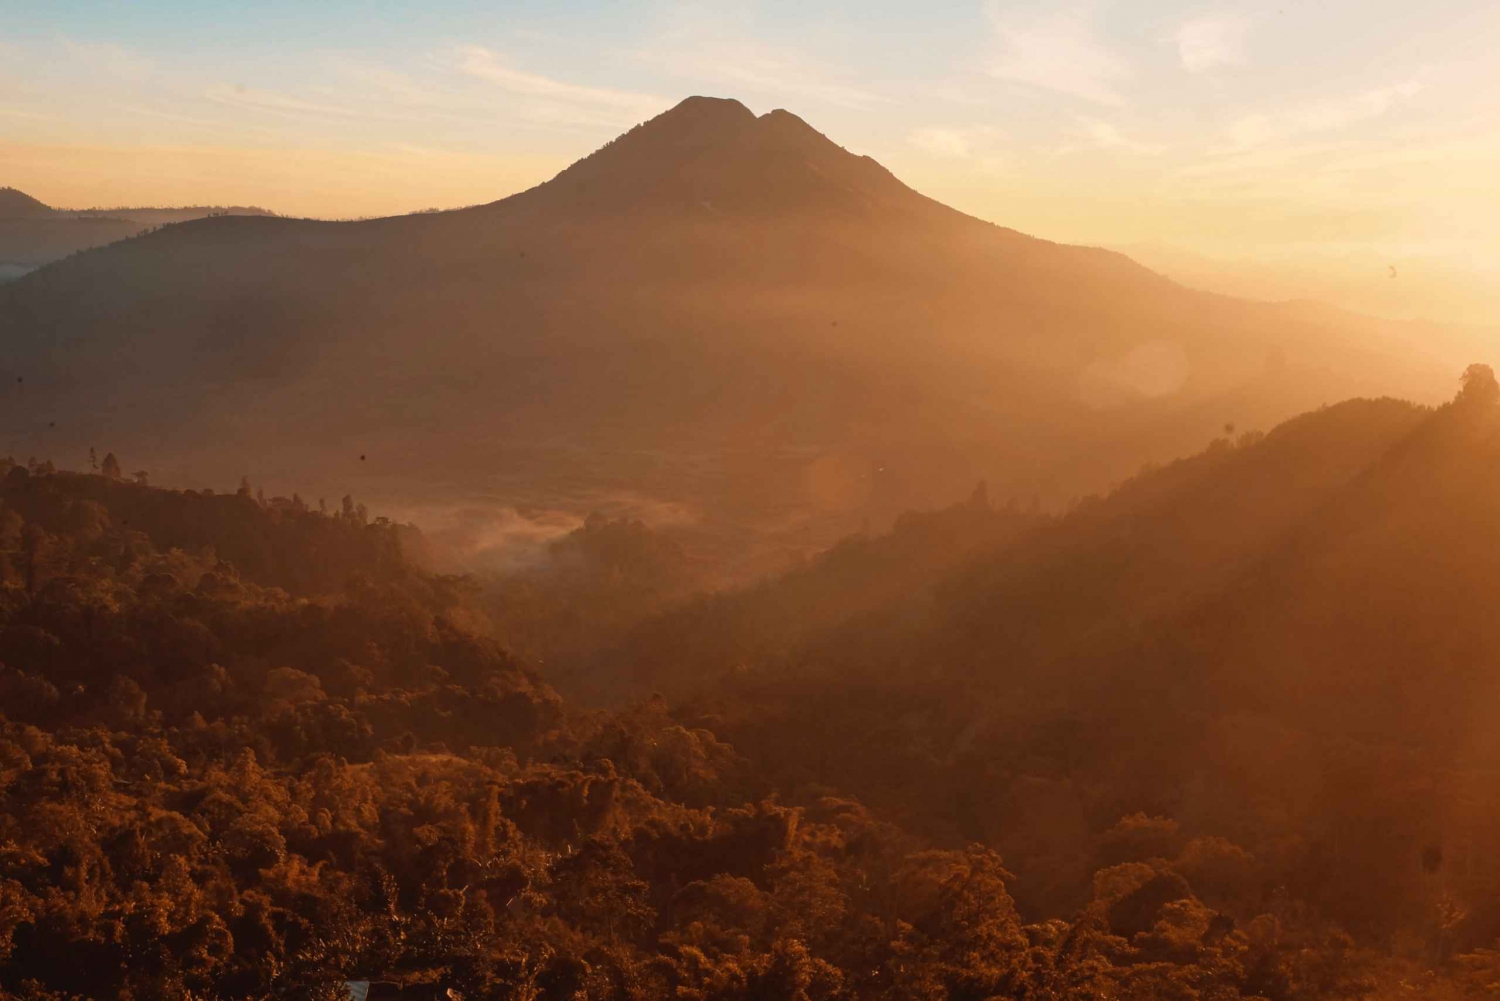 Bali: Mount Batur Sunrise Trek With Guide and Breakfast